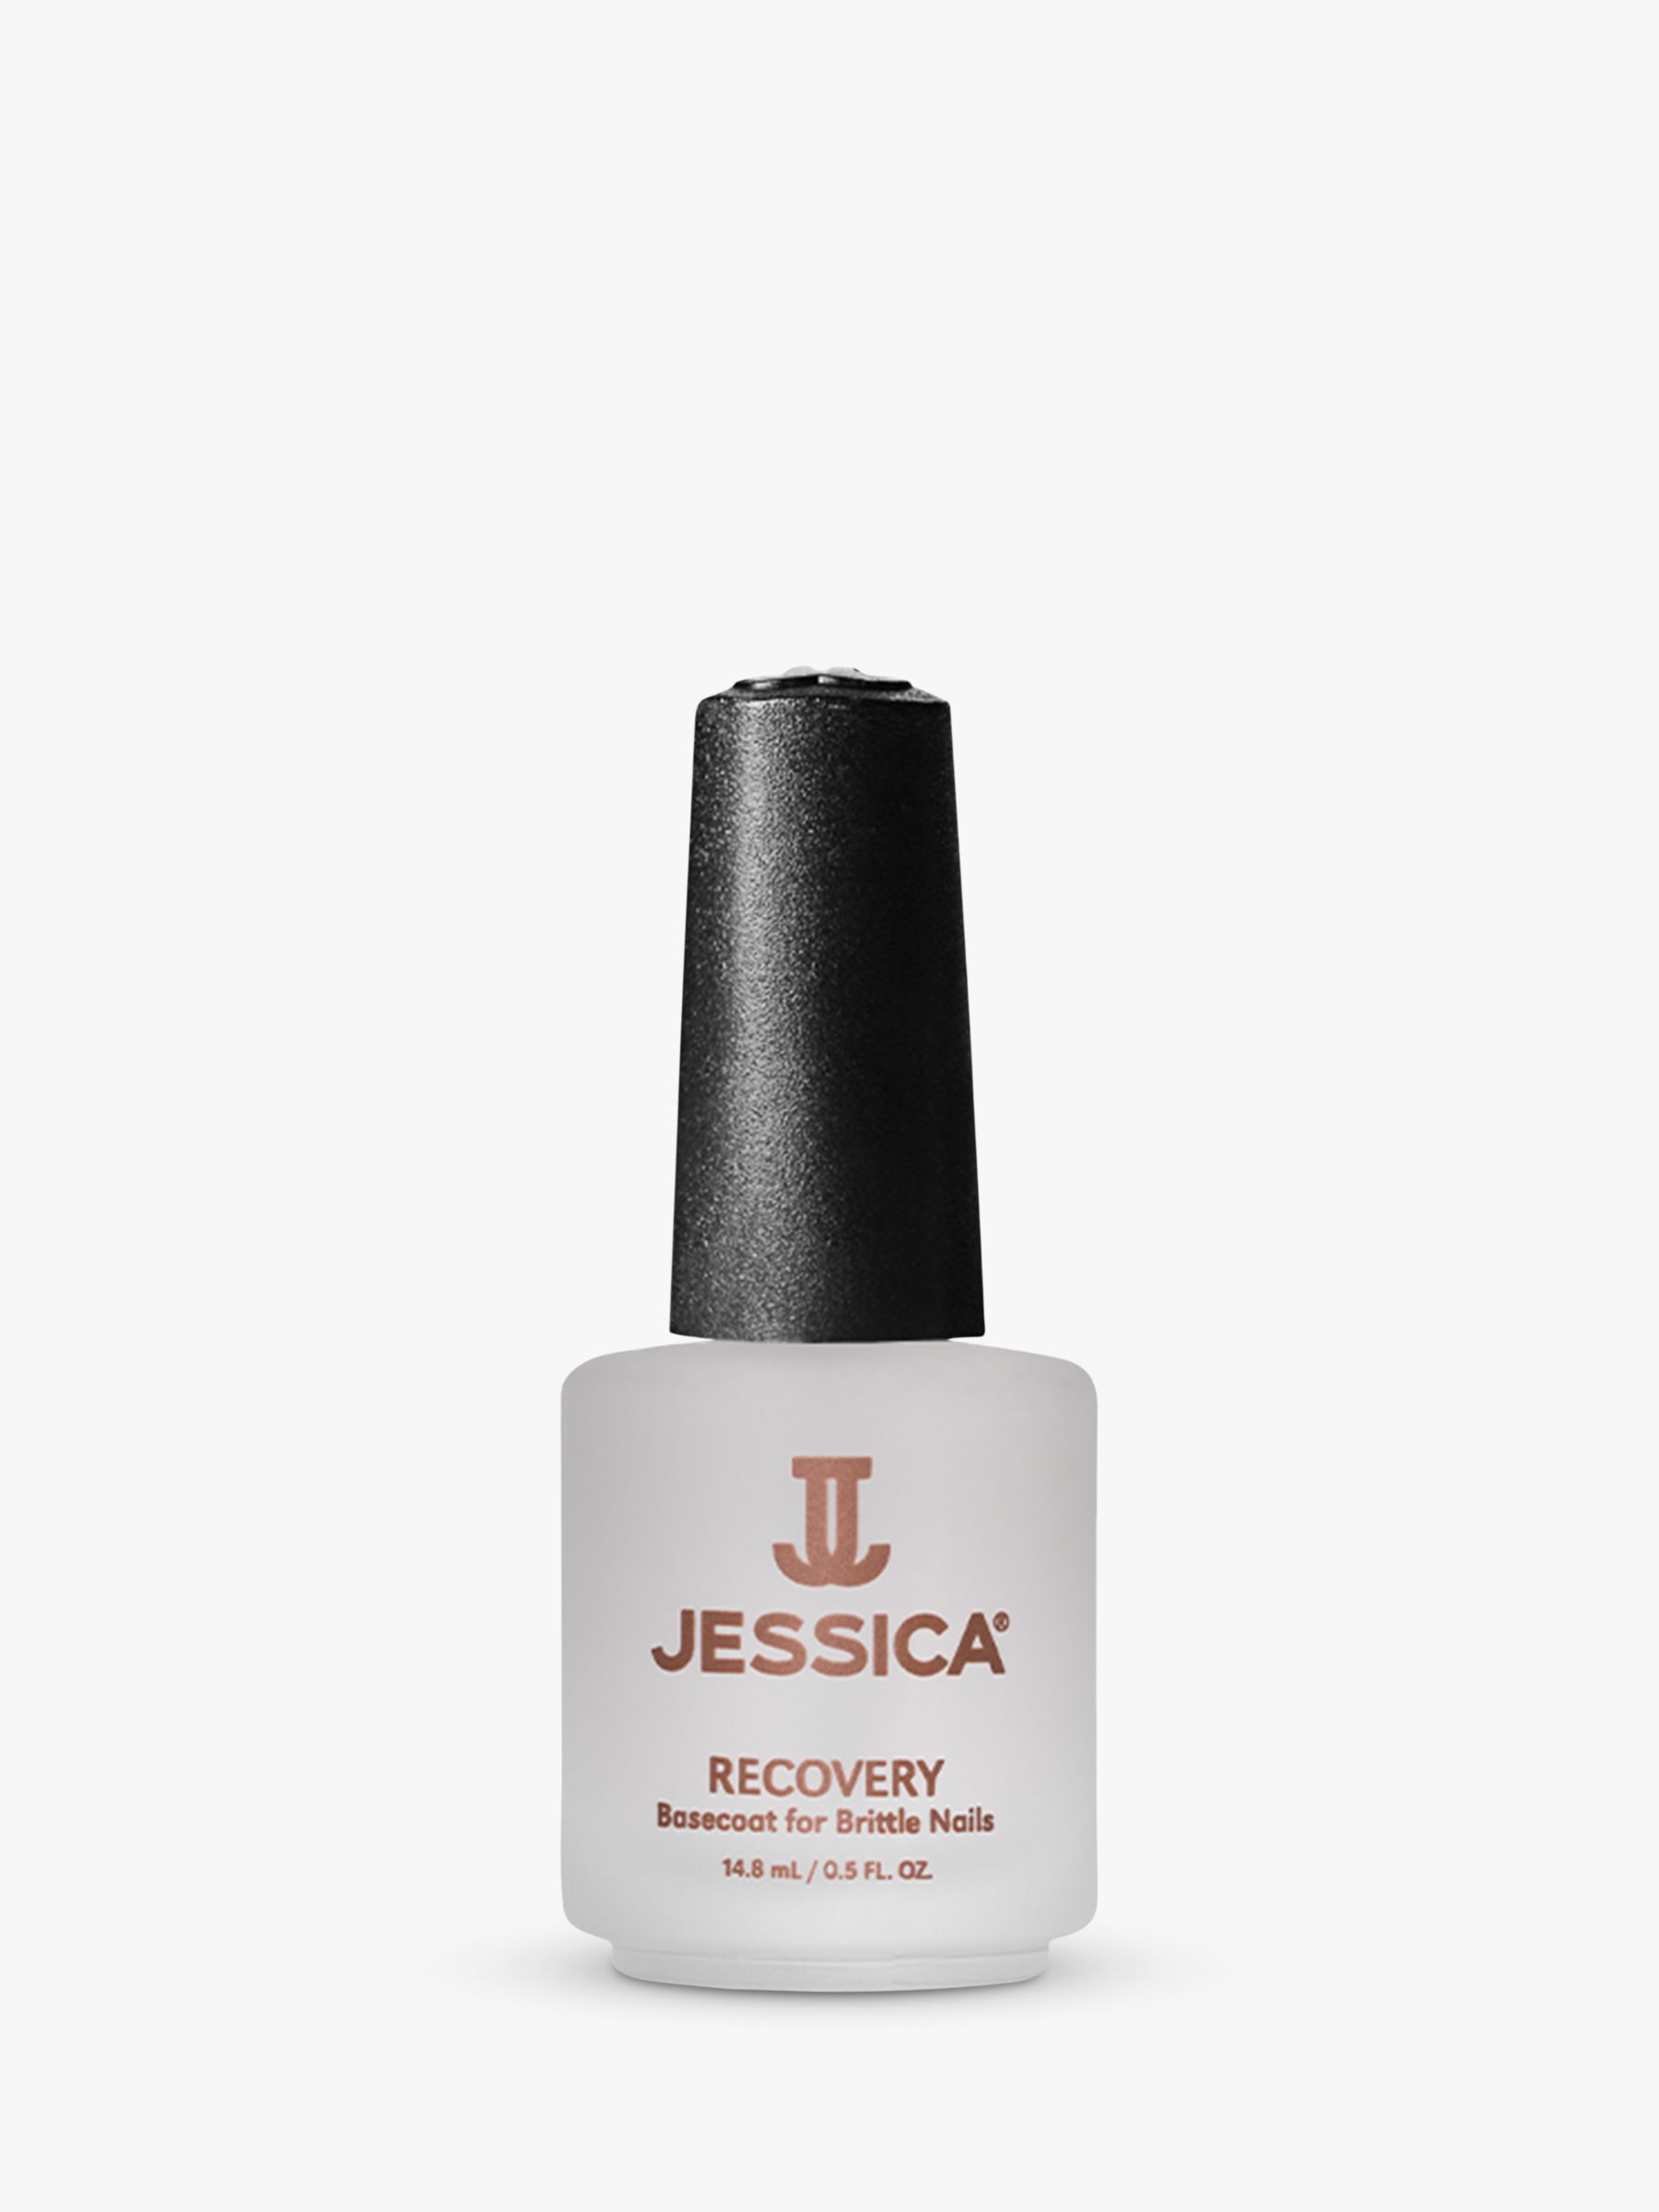 Jessica Recovery Base Coat, 14.8ml